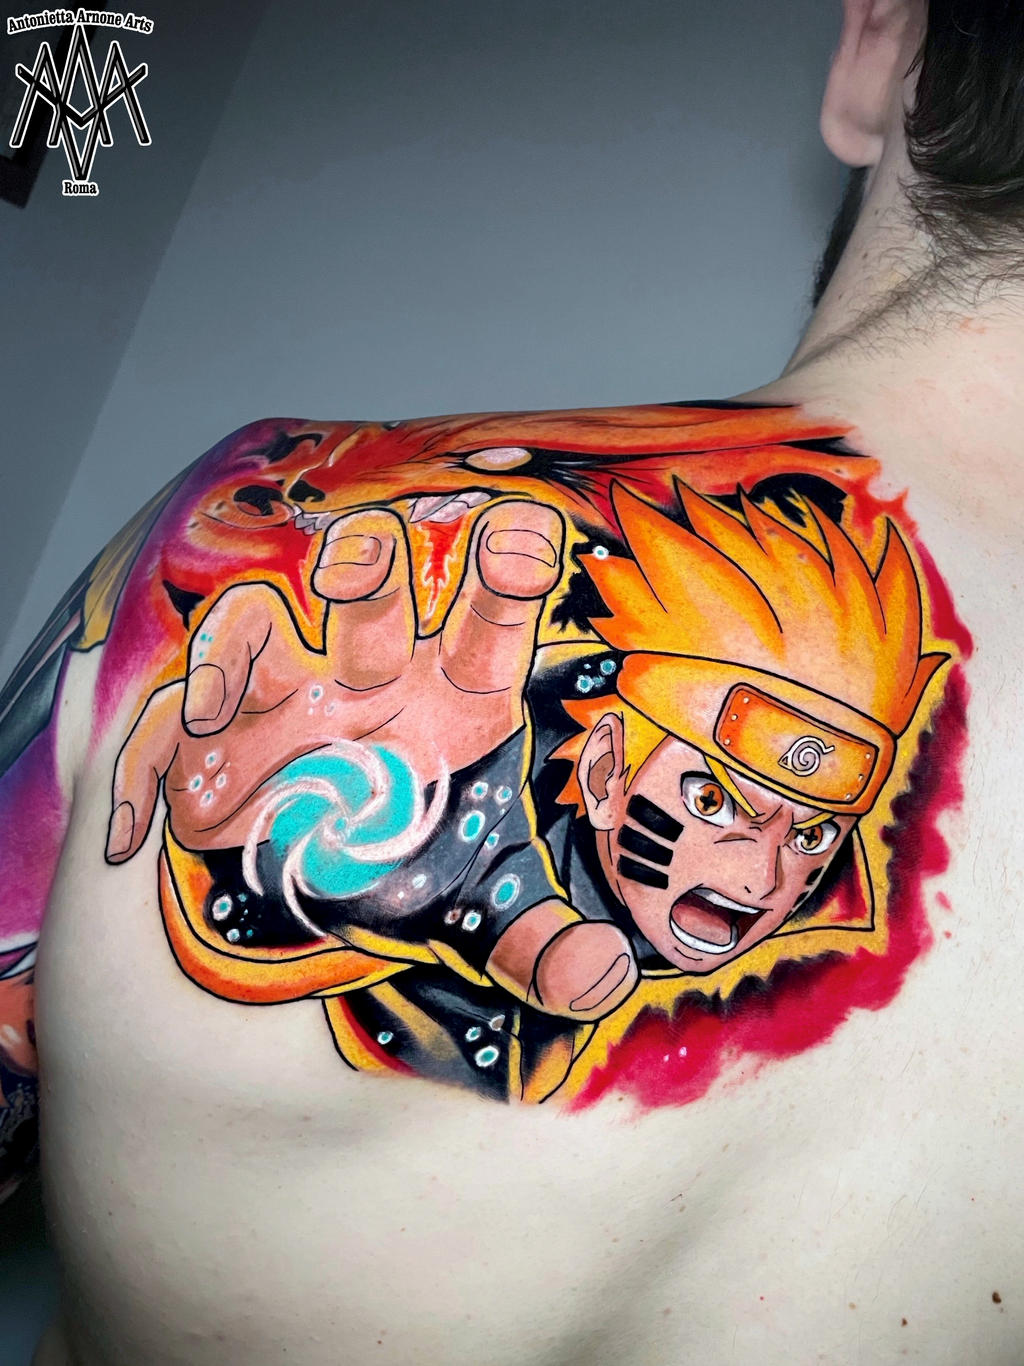 Naruto Kyuugekygan tattoo by Gokuromario on DeviantArt